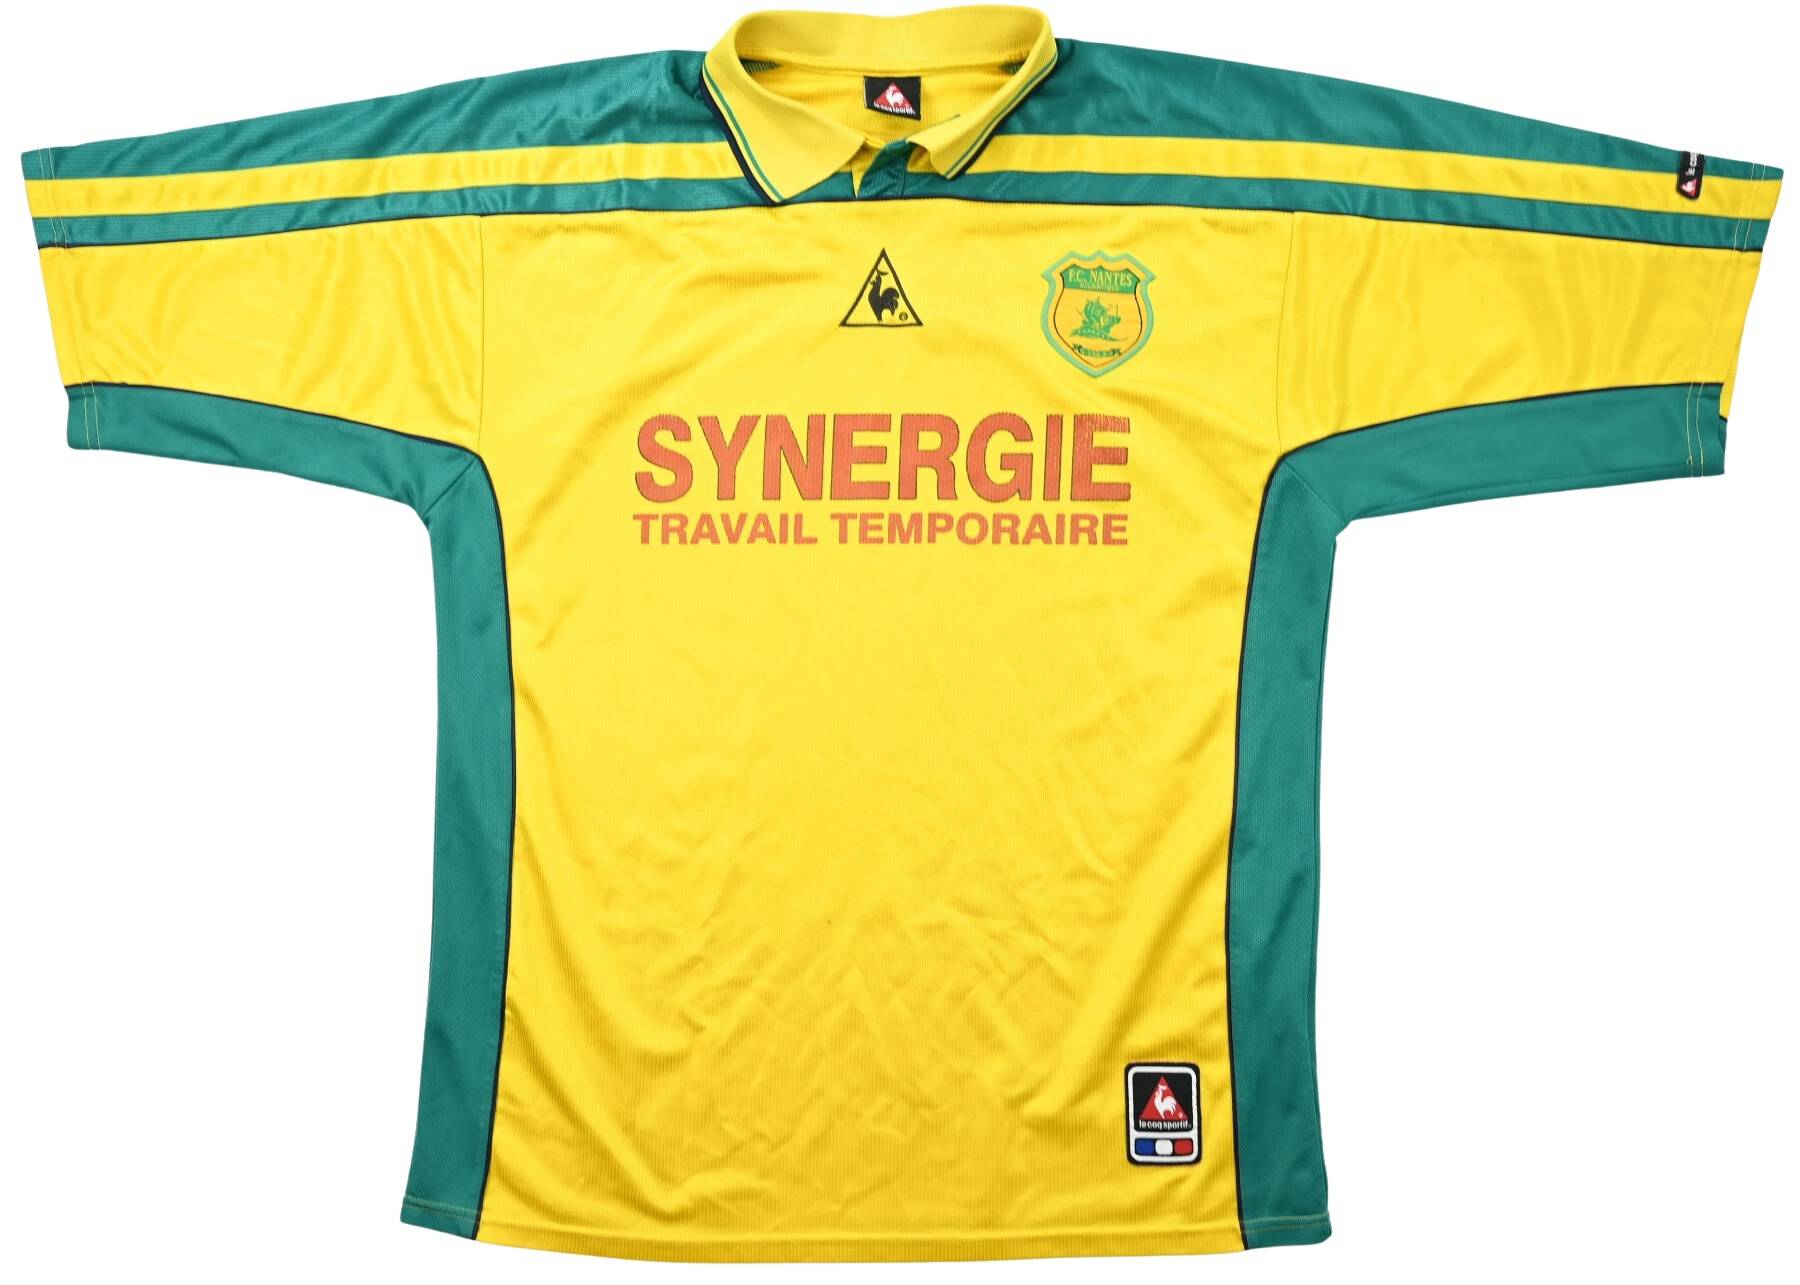 2001 / 2002 - FC Nantes (XL)